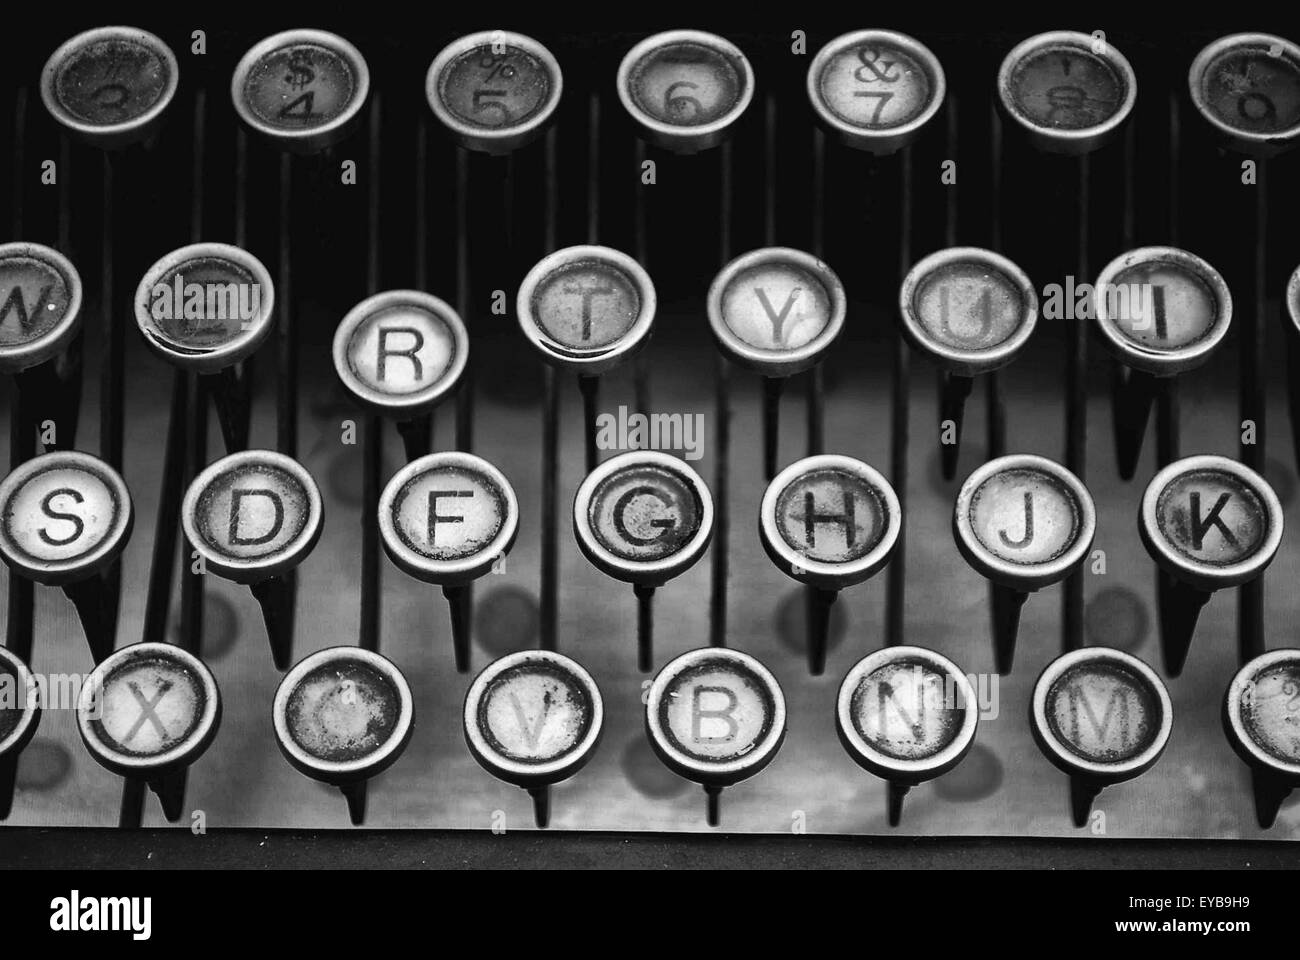 Old fashioned typewriter keyboard Stock Photo